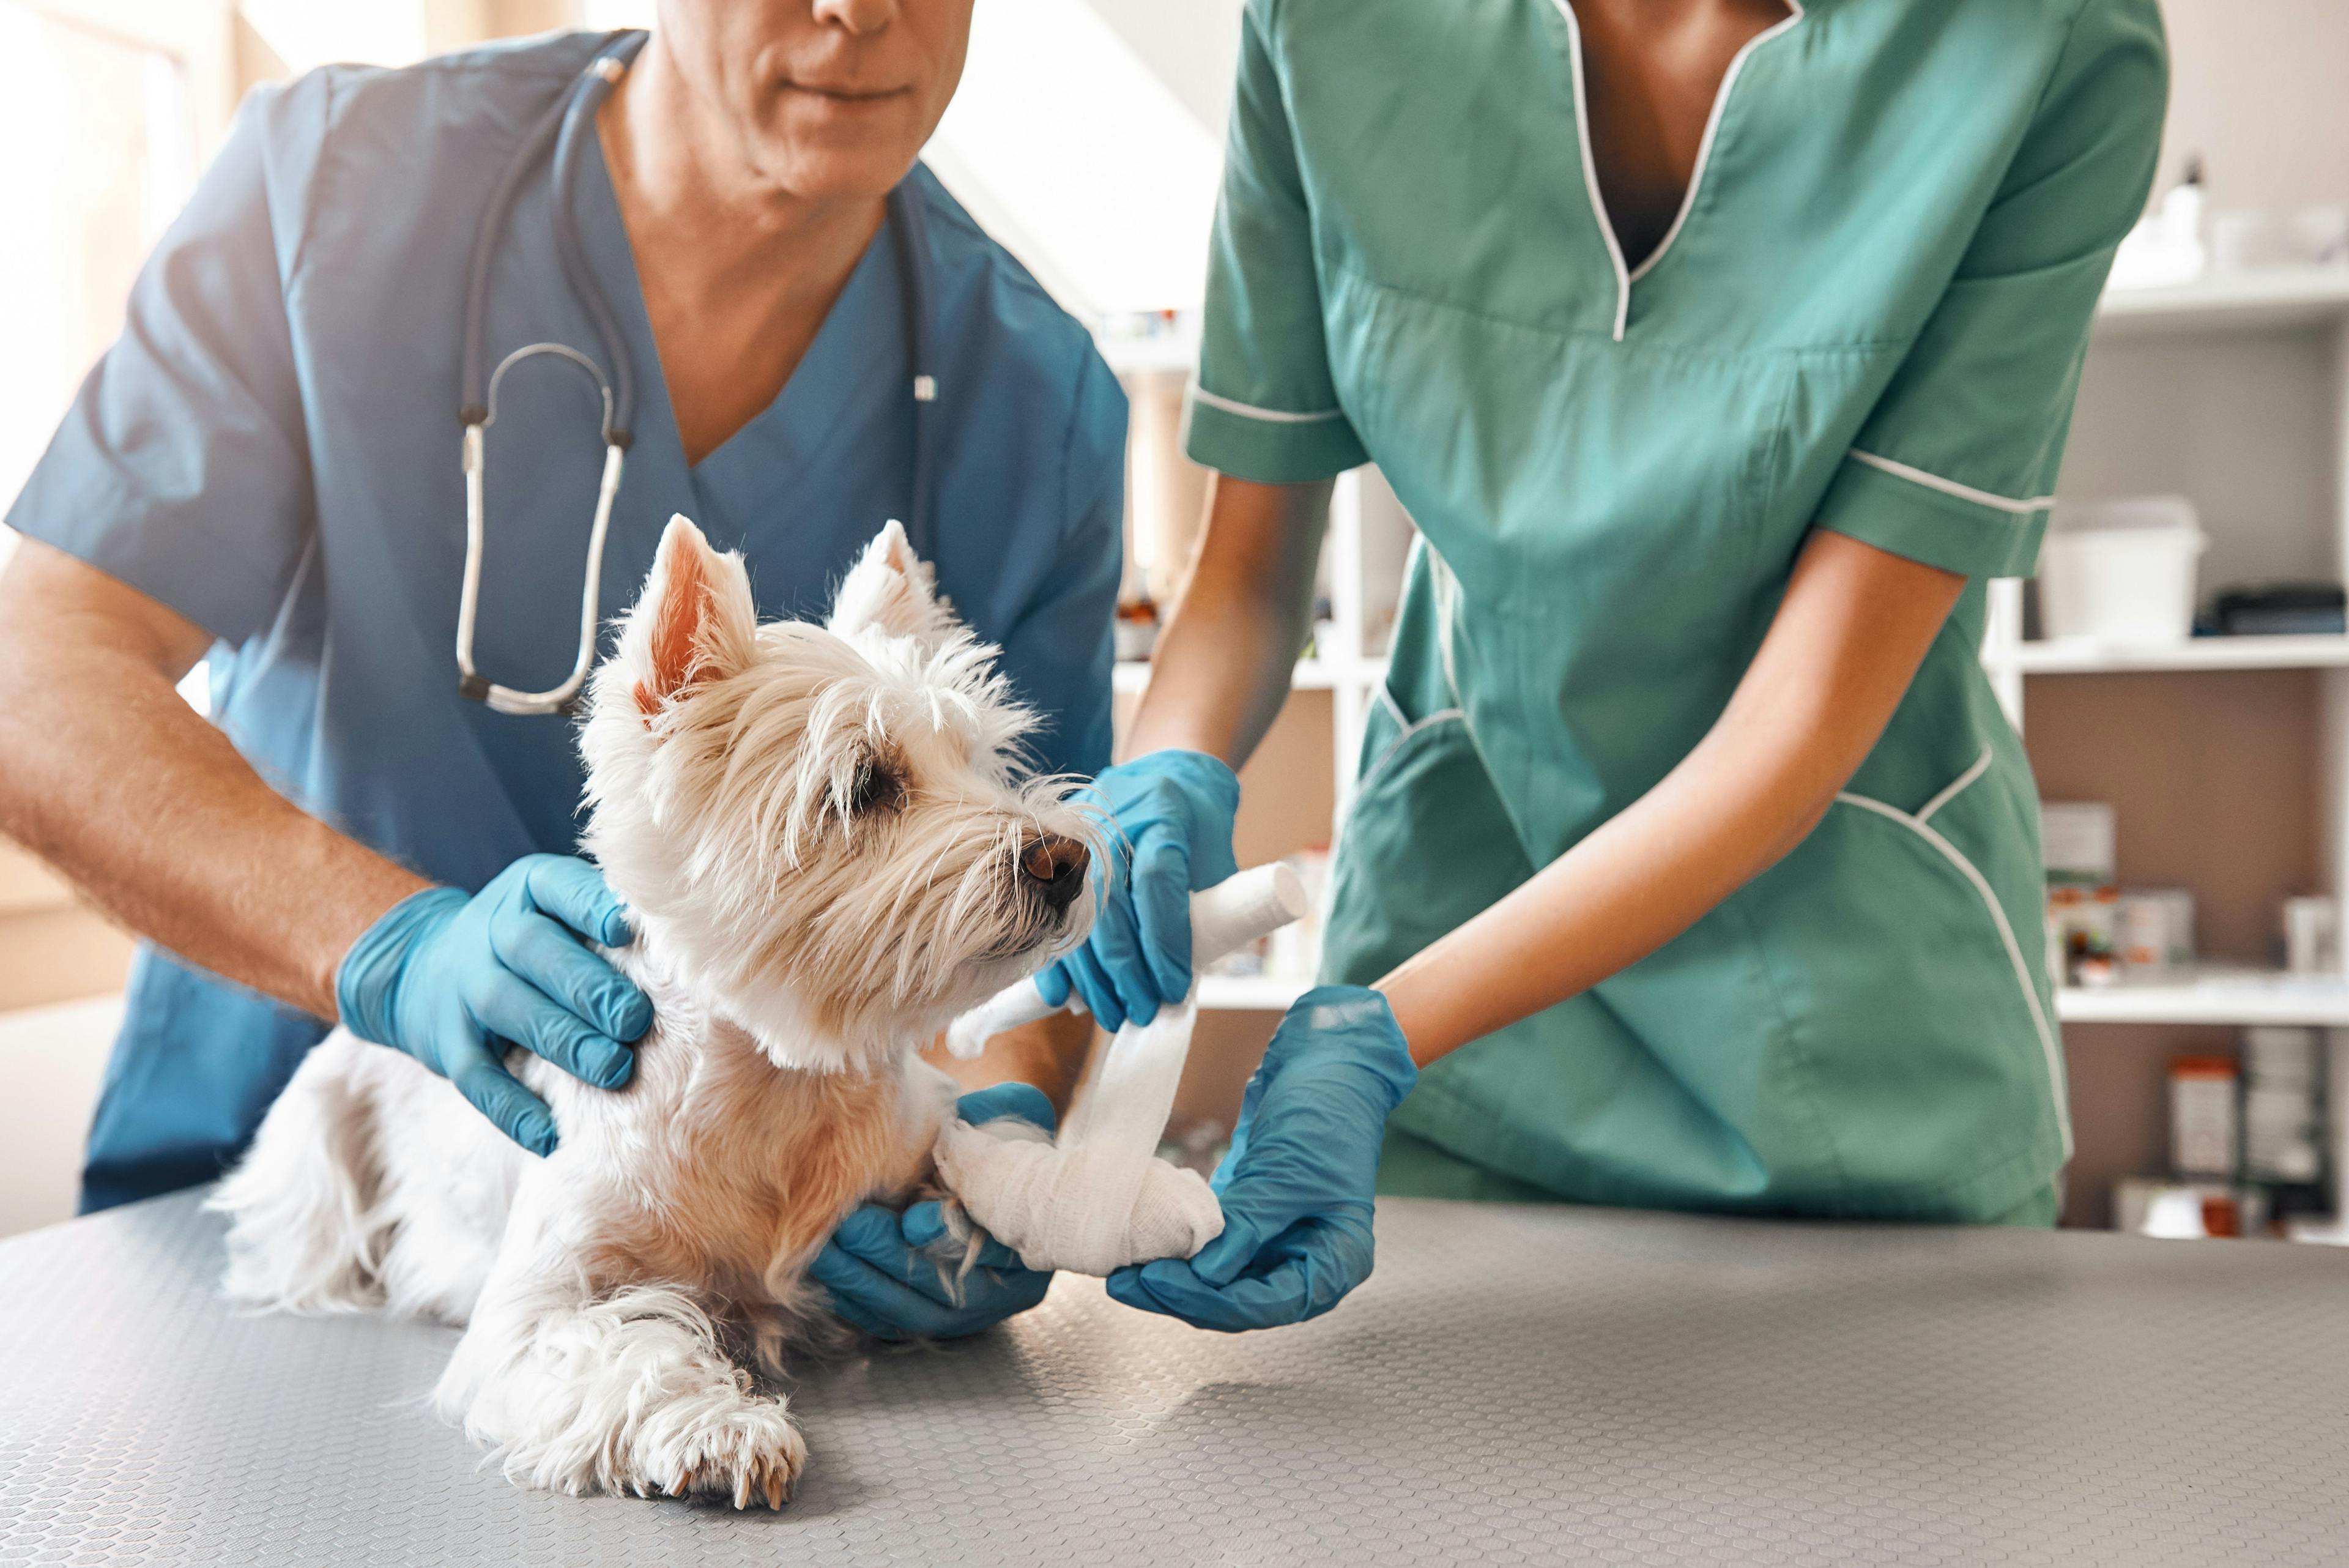 Veterinarians bandage a dog's paw